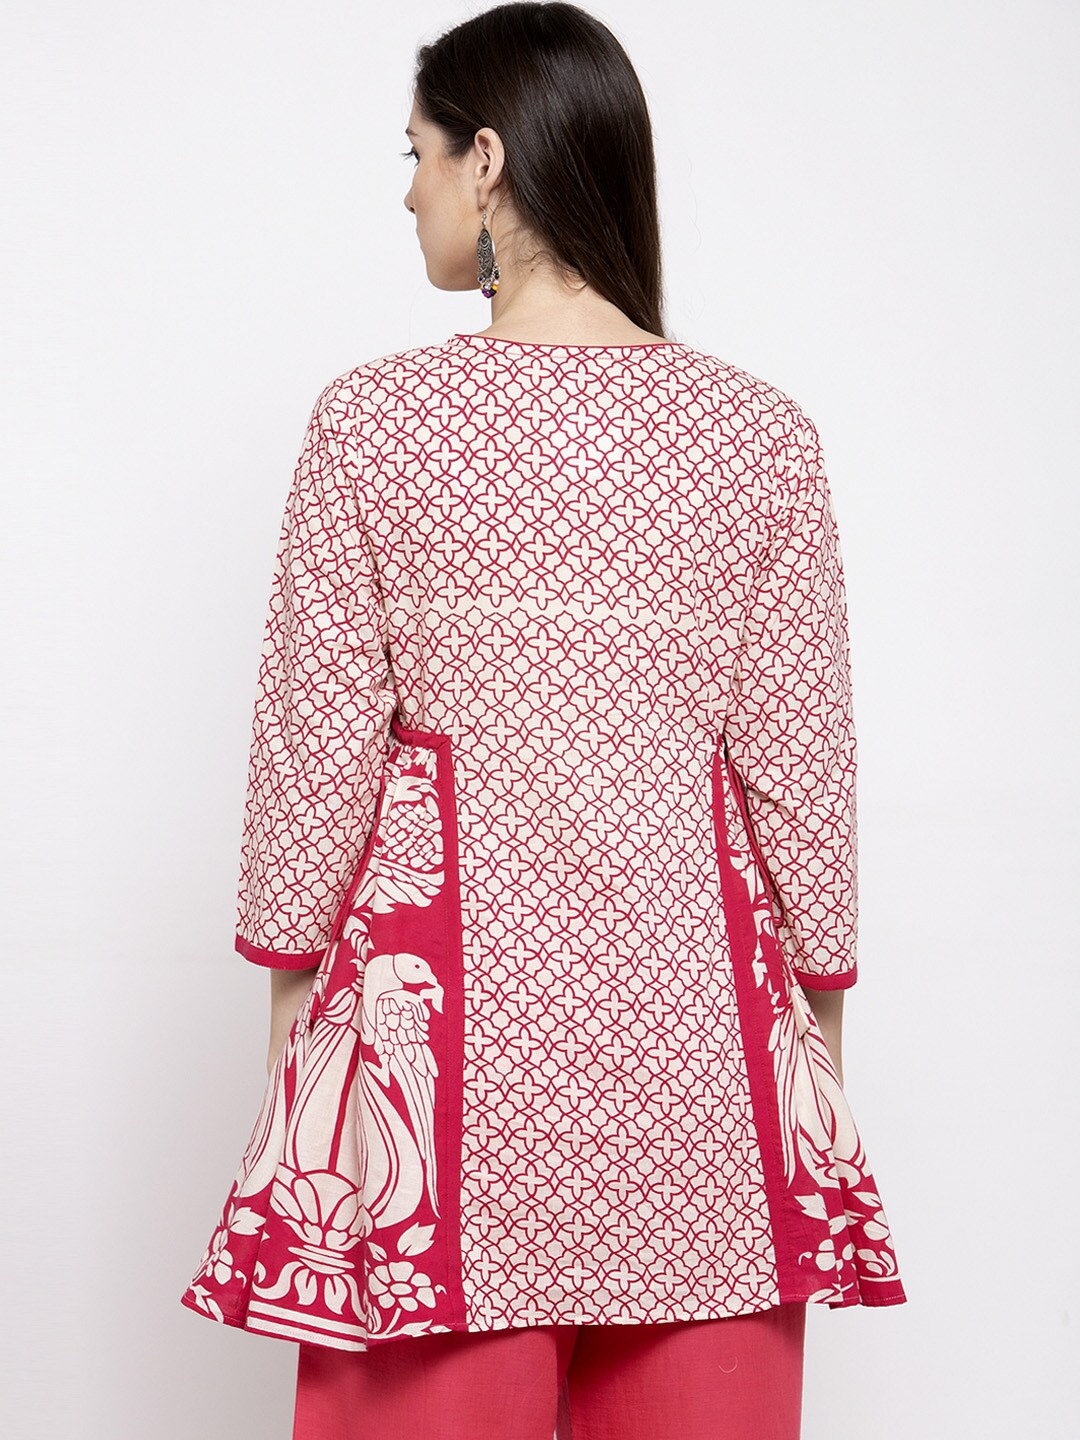 Women's  Women's Off-White & Pink Printed Tunic - Wahe-NOOR